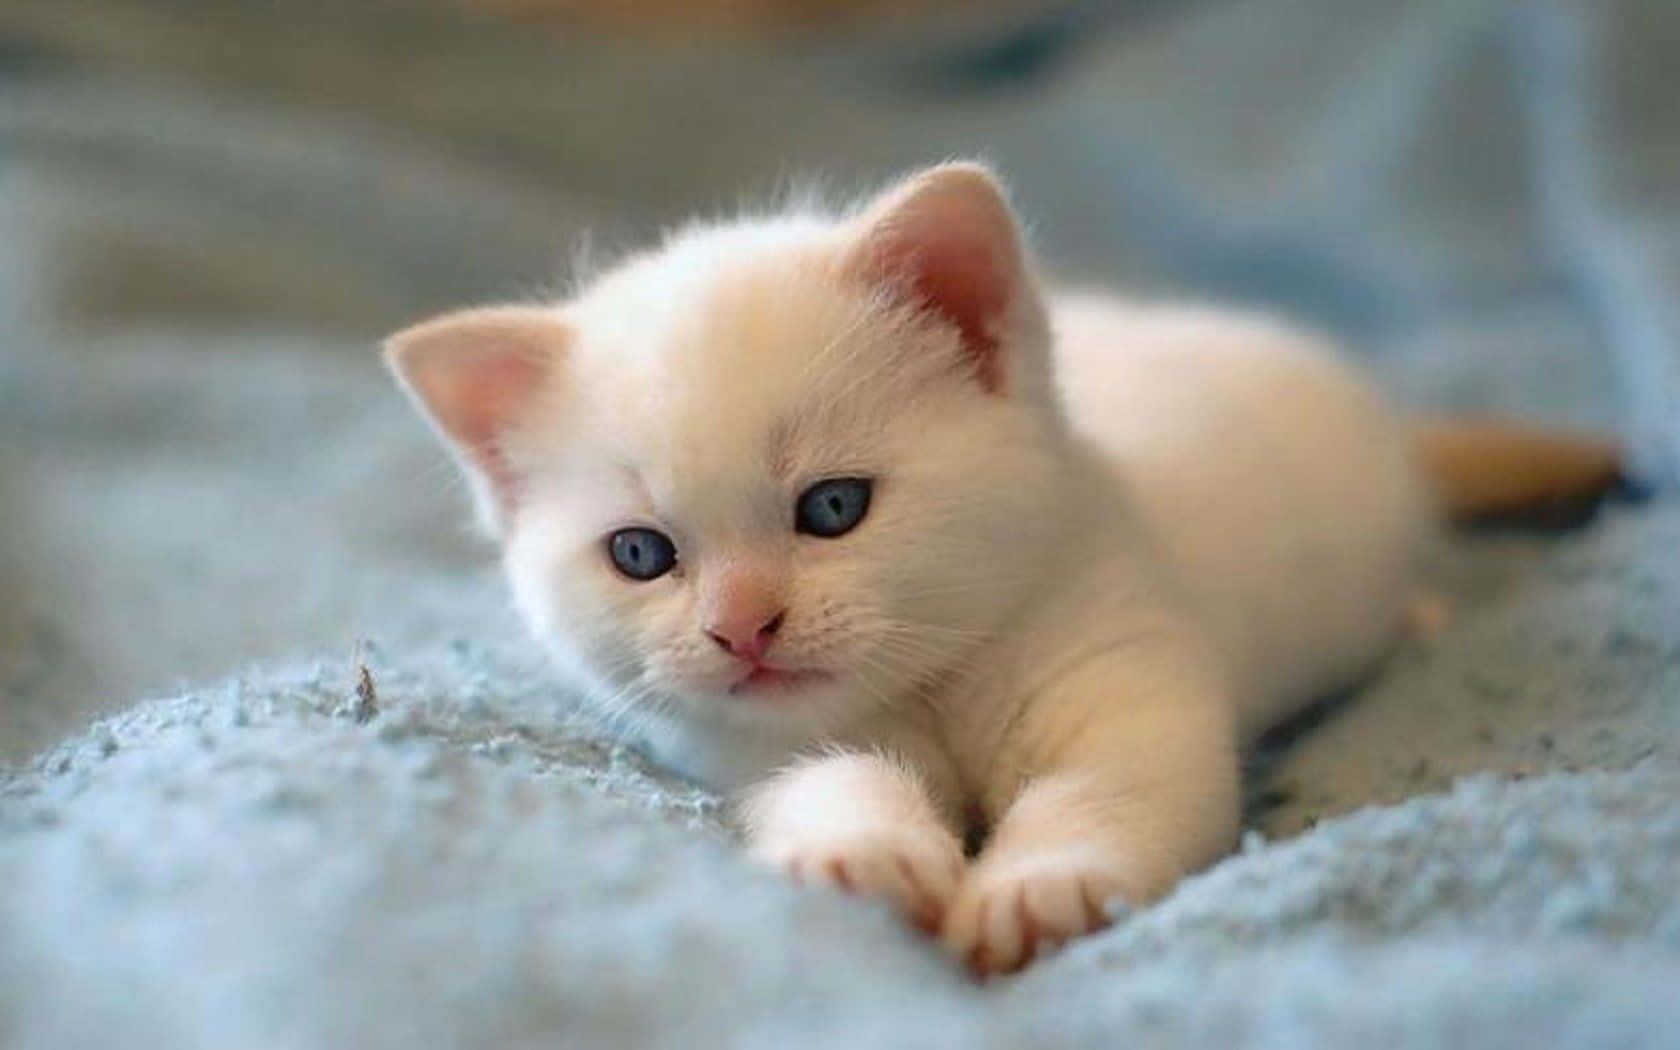 Awwwww! What a cute little baby animal!